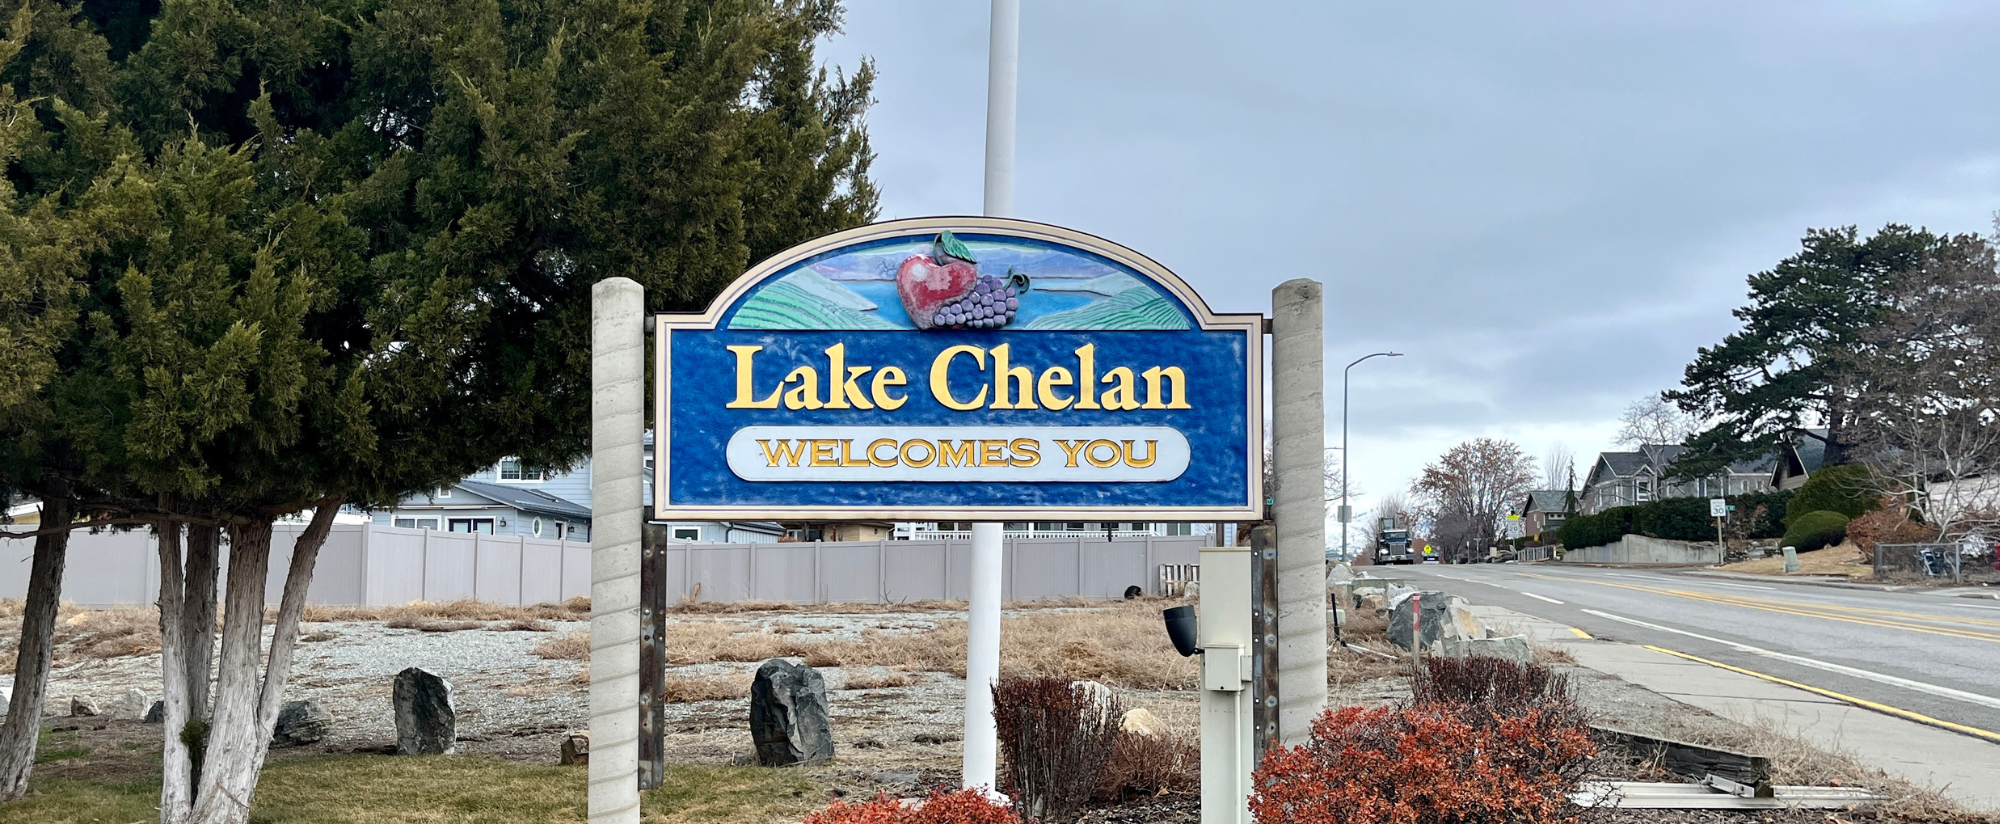 History of Chelan,Washington